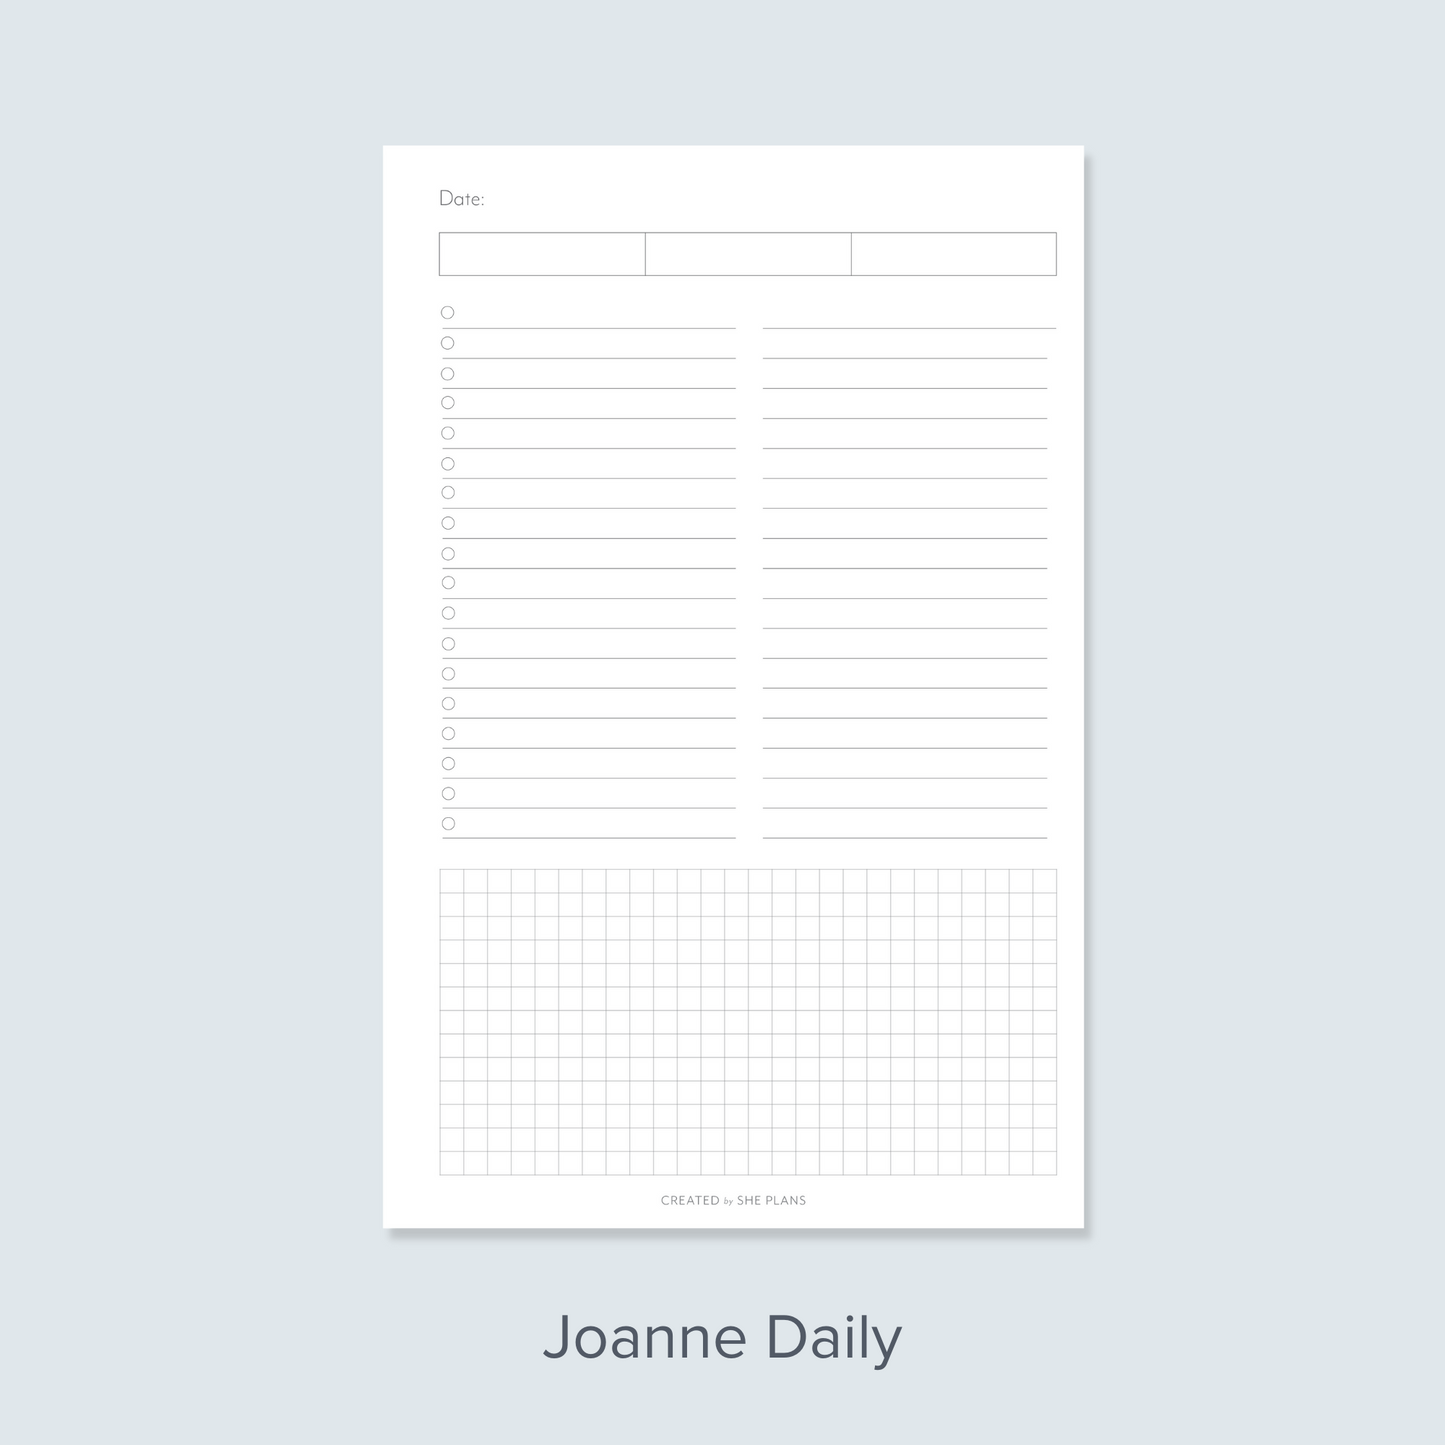 Joanne Daily Discbound Inserts (31 days)